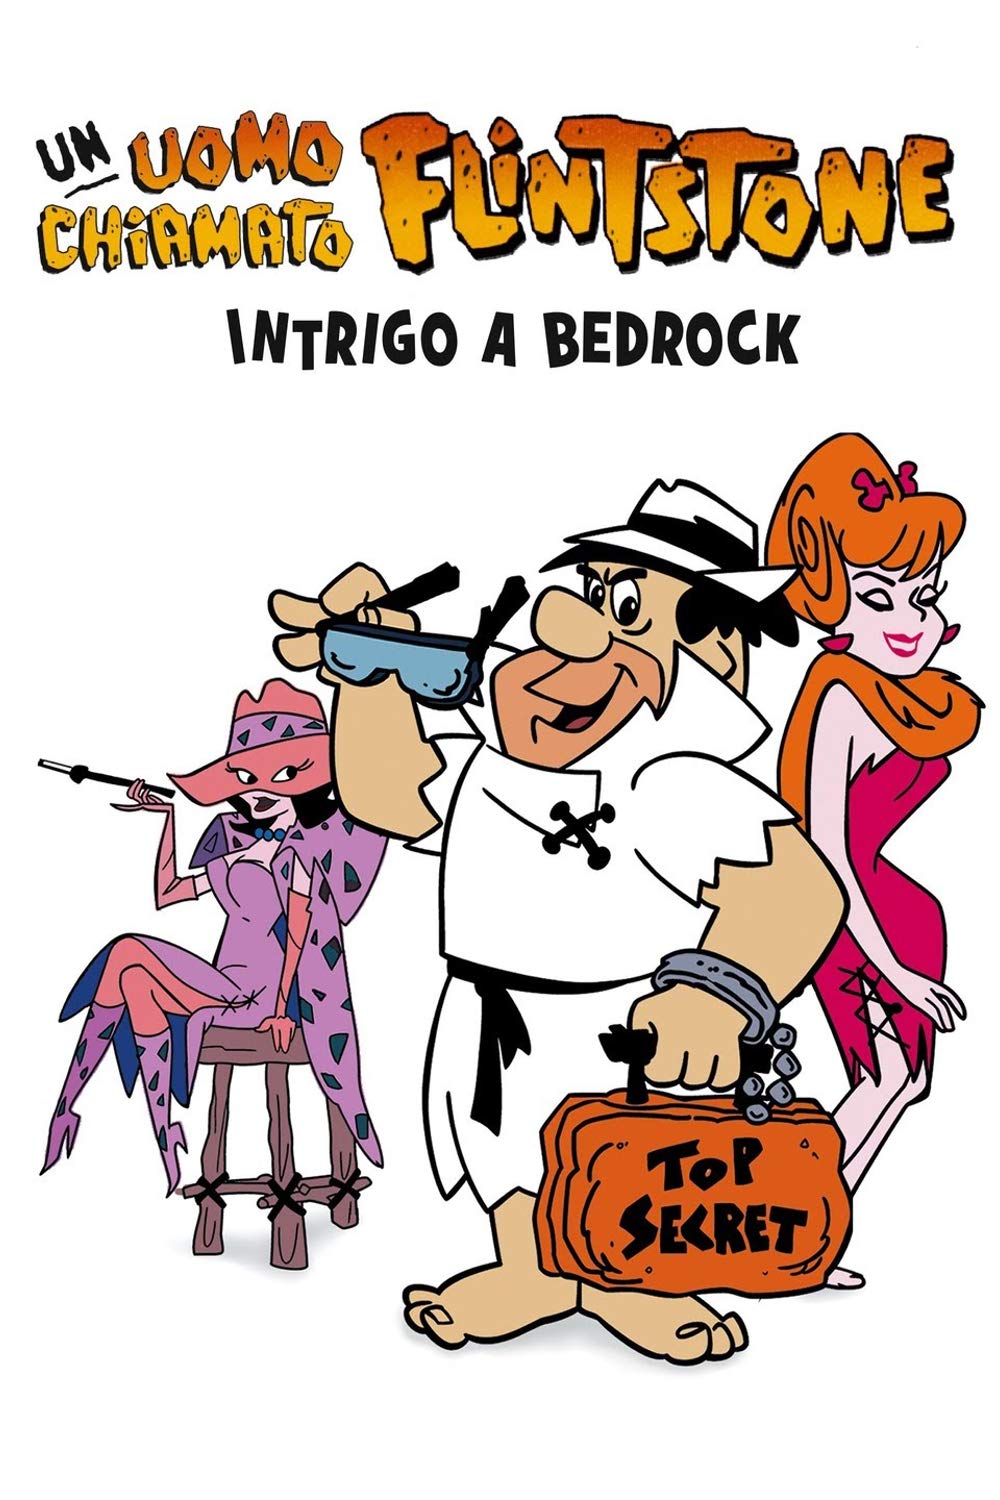 Un uomo chiamato Flintstone: Intrigo a Bedrock (1966)